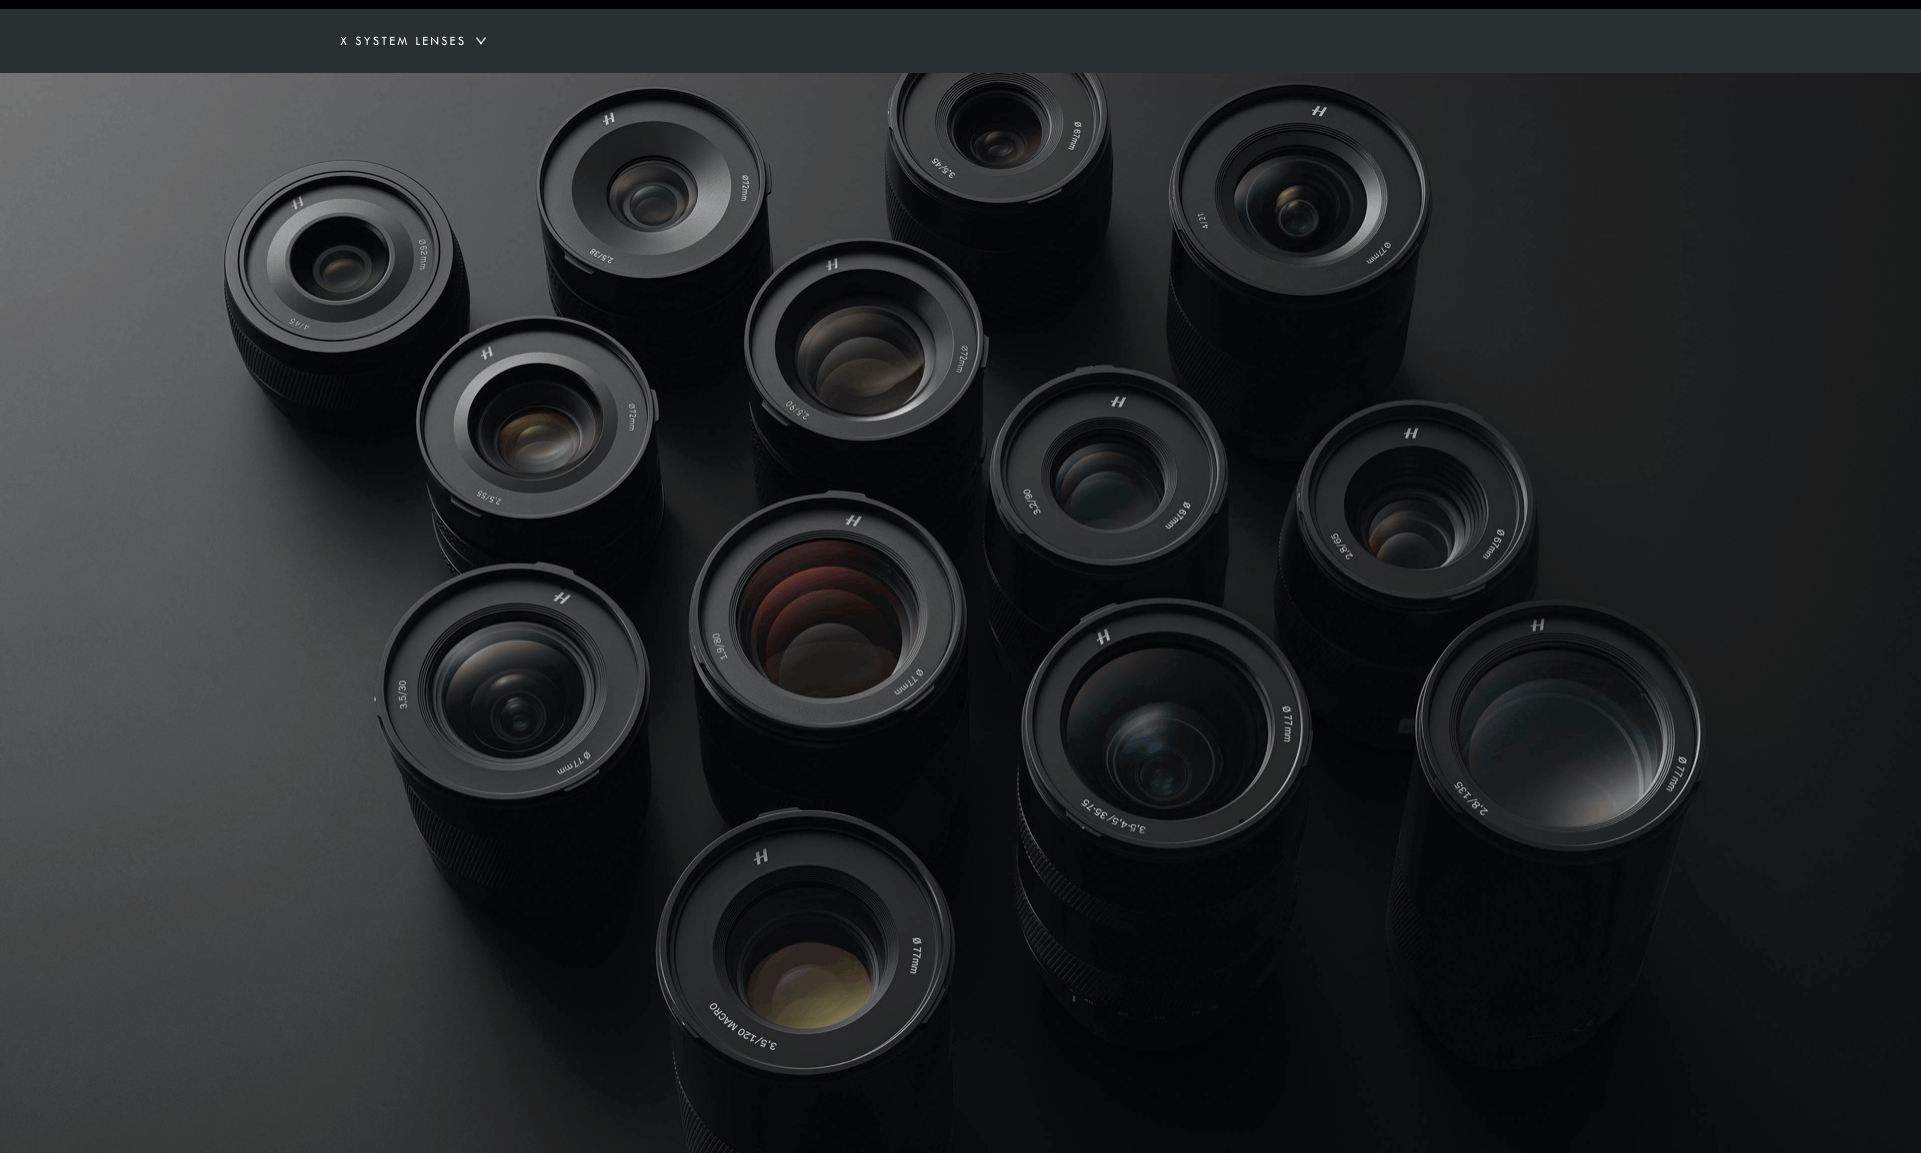 Hasselblad's 13 X series Lenses, XCD HASSELBLAD LENSES